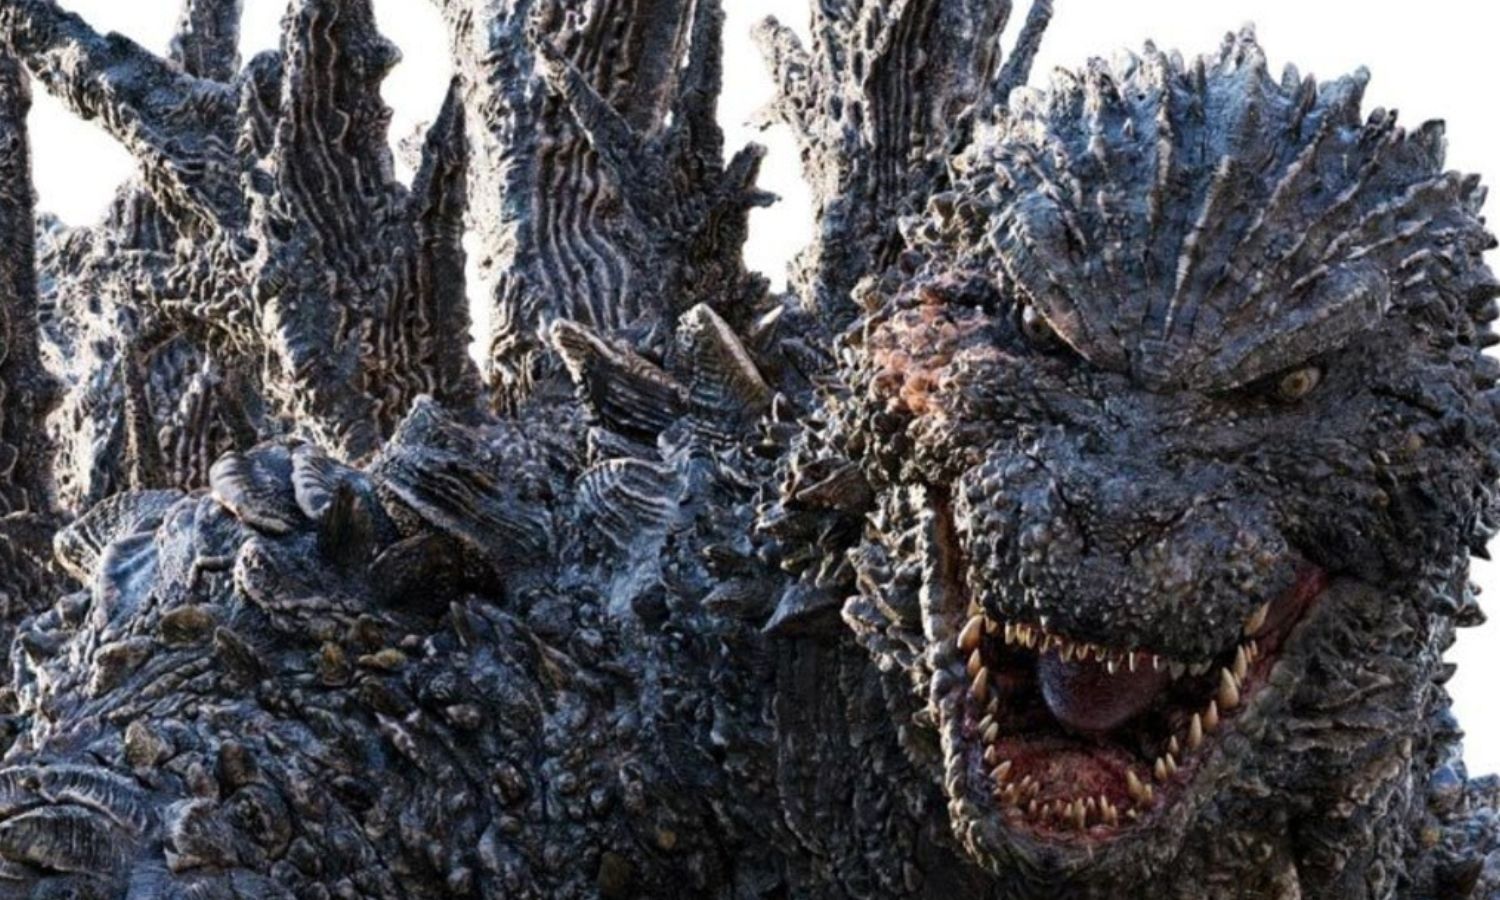 Godzilla Minus One Trailer